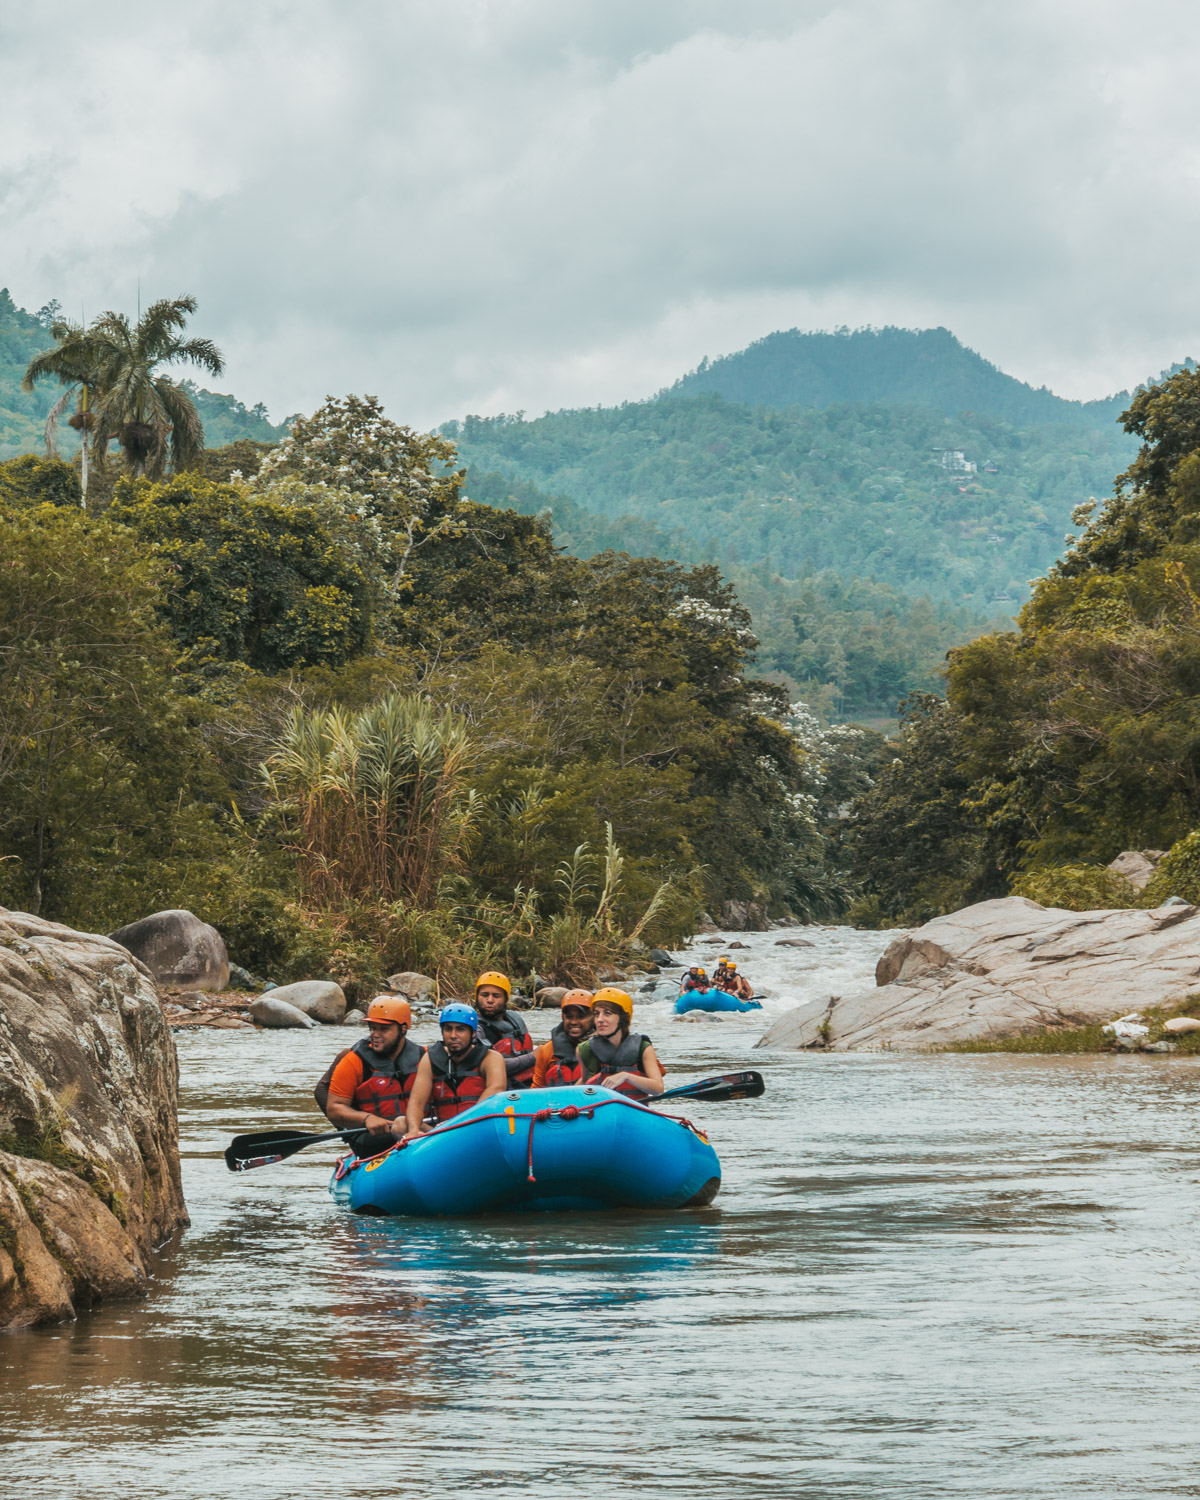 Whitewater Rafting // The Adventure Guide to Jarabacoa, Dominican Republic #readysetjetset #travel #bloggingtips #traveltips #caribbean